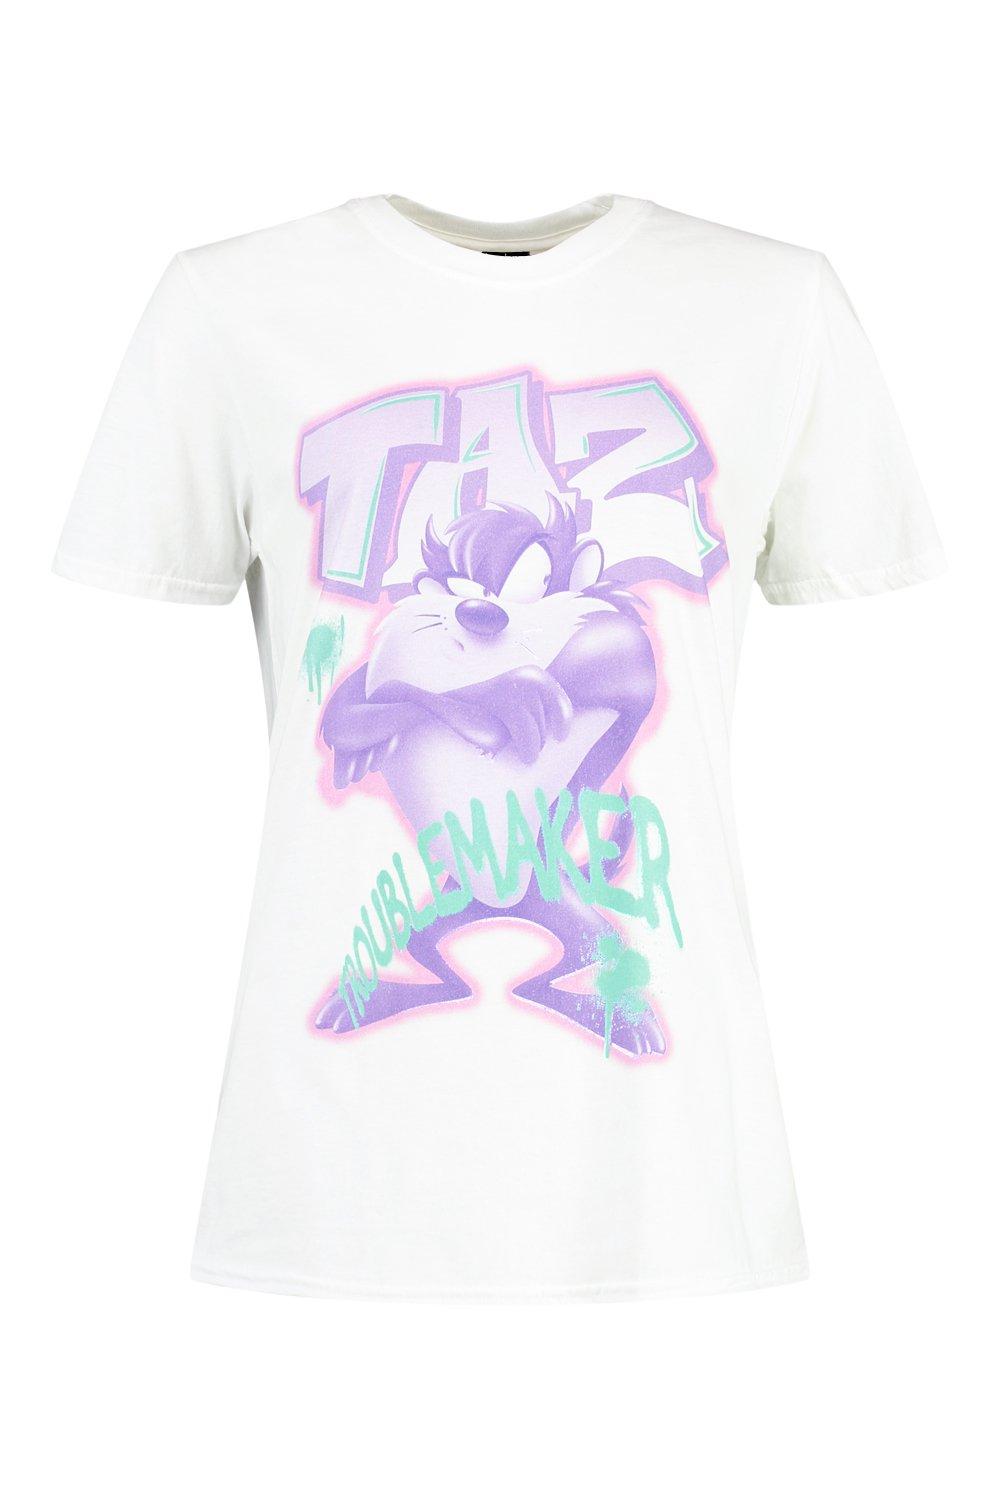 Taz T-Shirt Licensed Grafitti | boohoo Tunes Looney